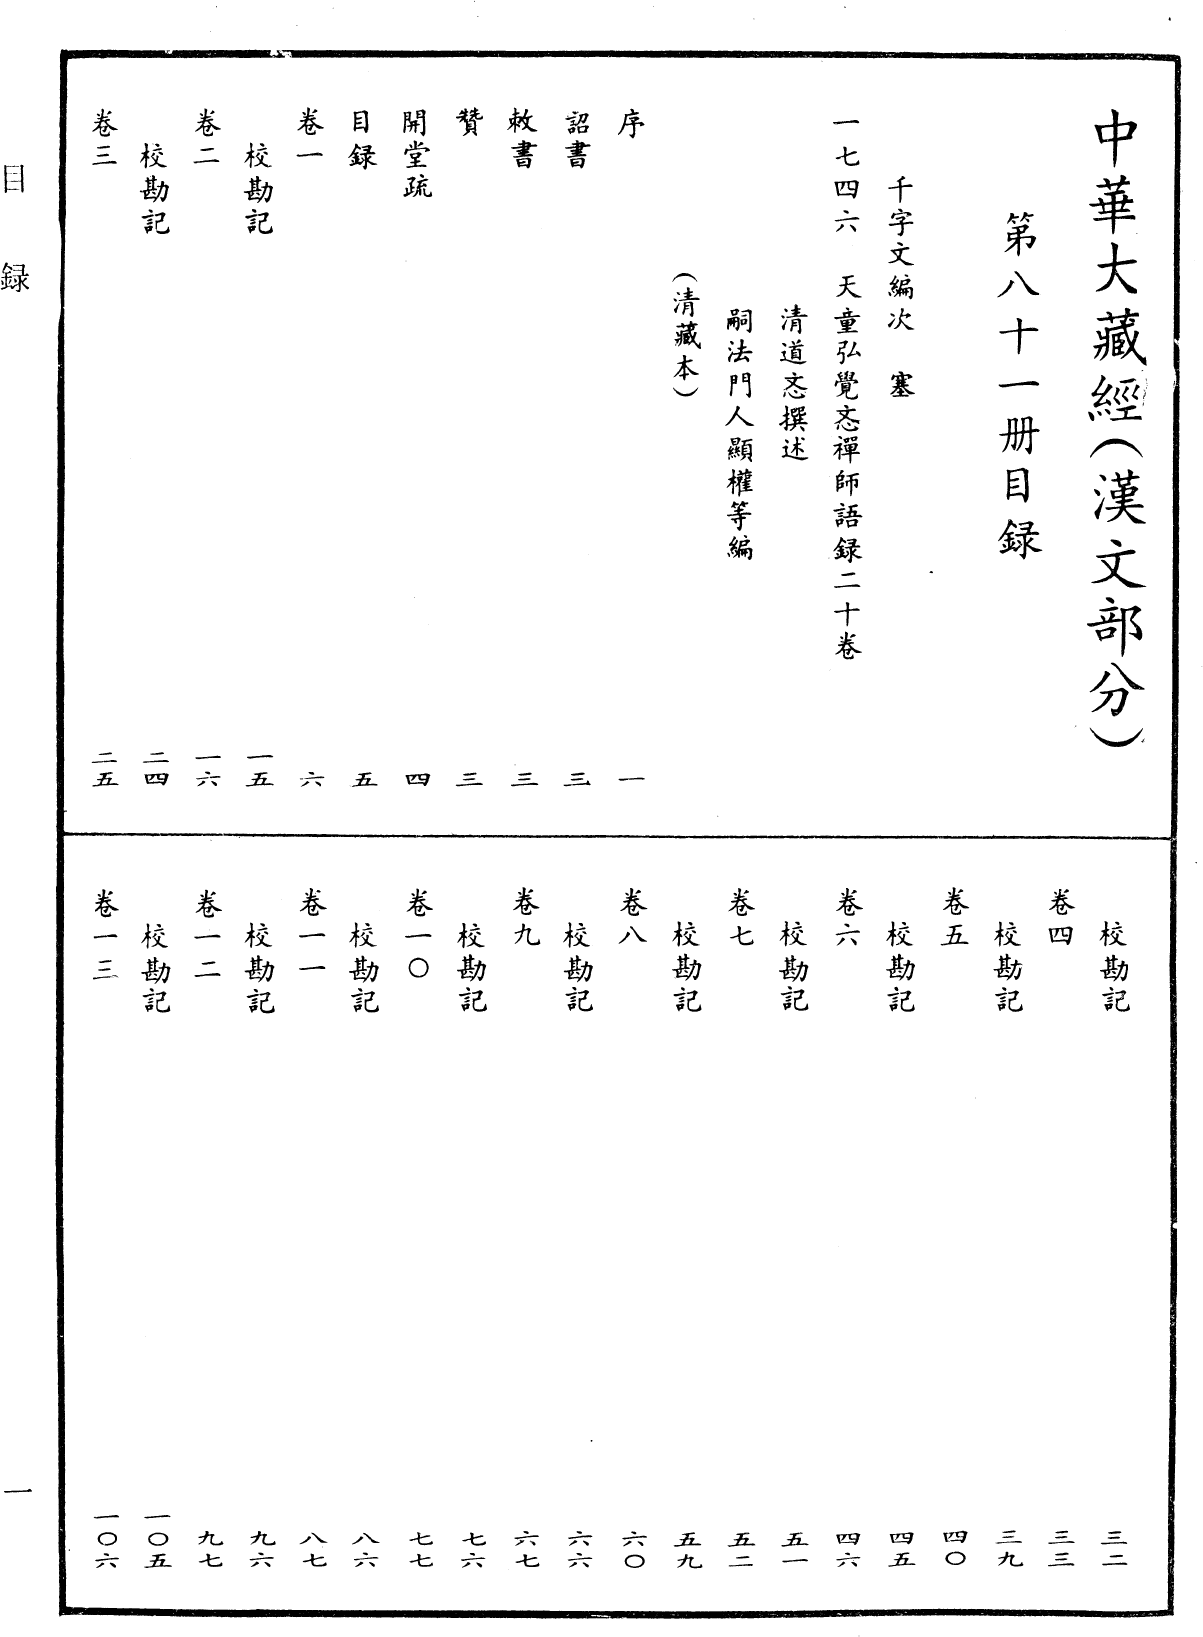 File:《中華大藏經》 第81冊 目録 (1).png